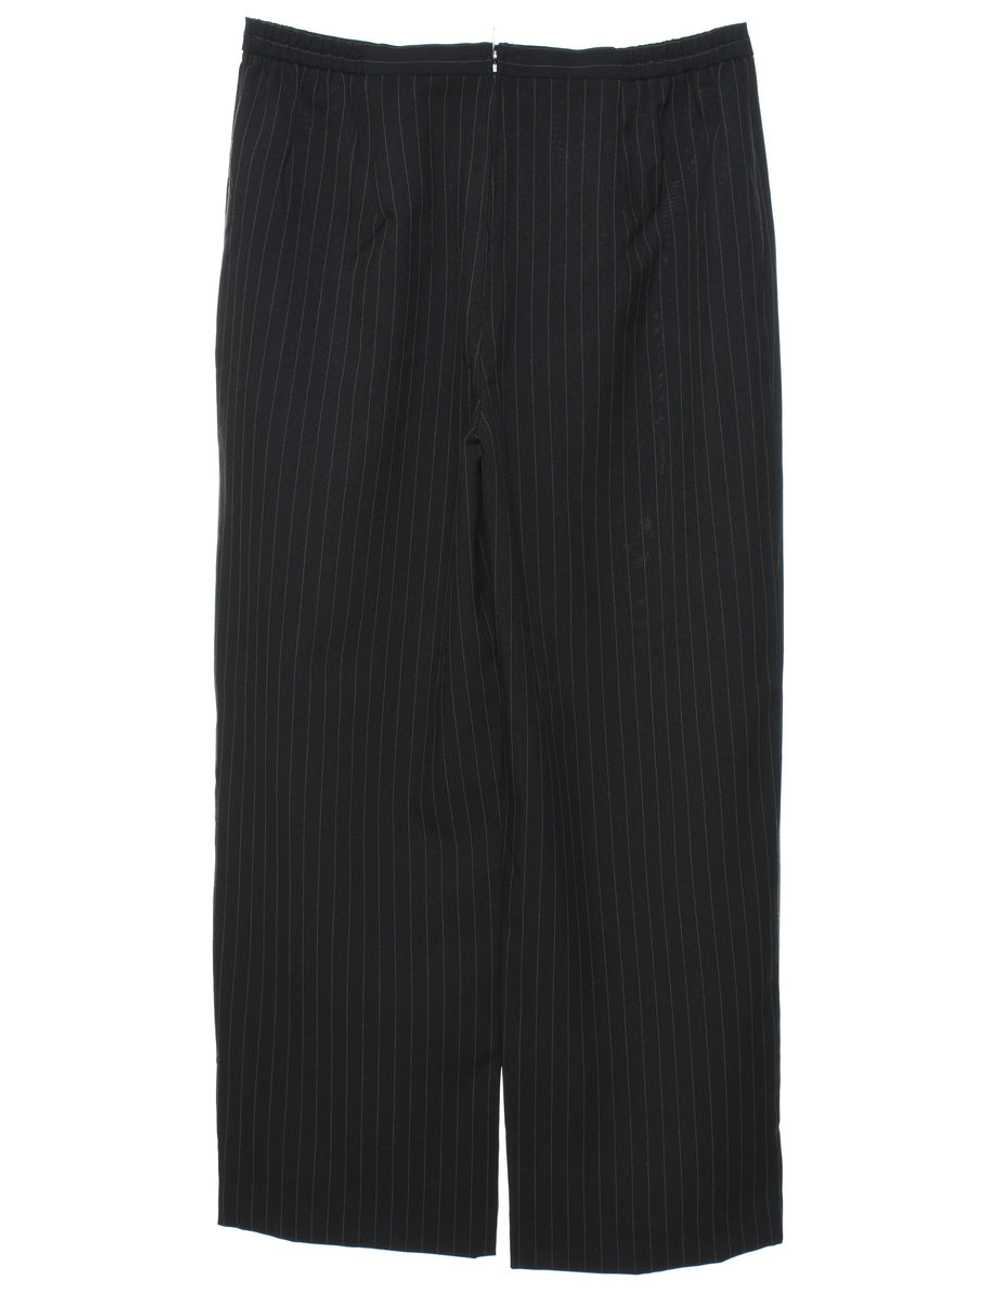 Black Pinstriped Trousers - W30 L27 - image 2